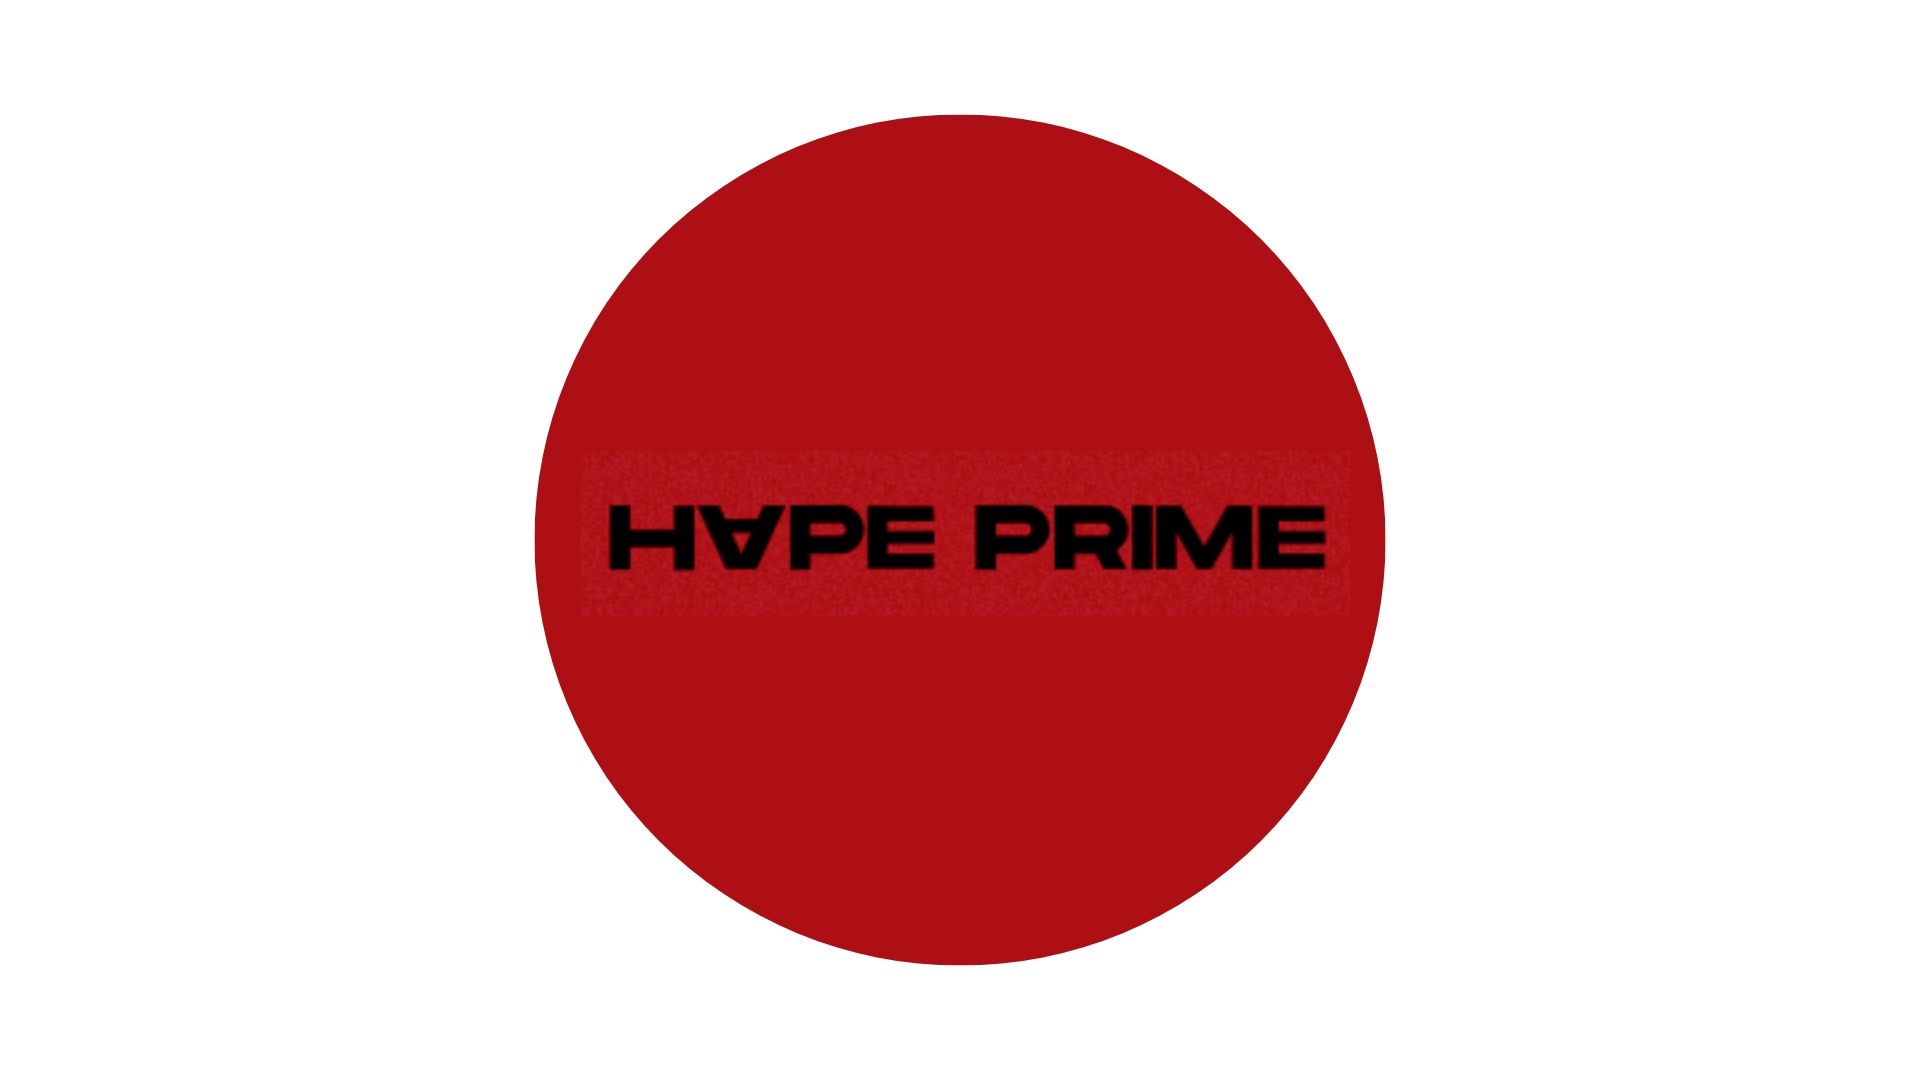 The Hape Prime logo